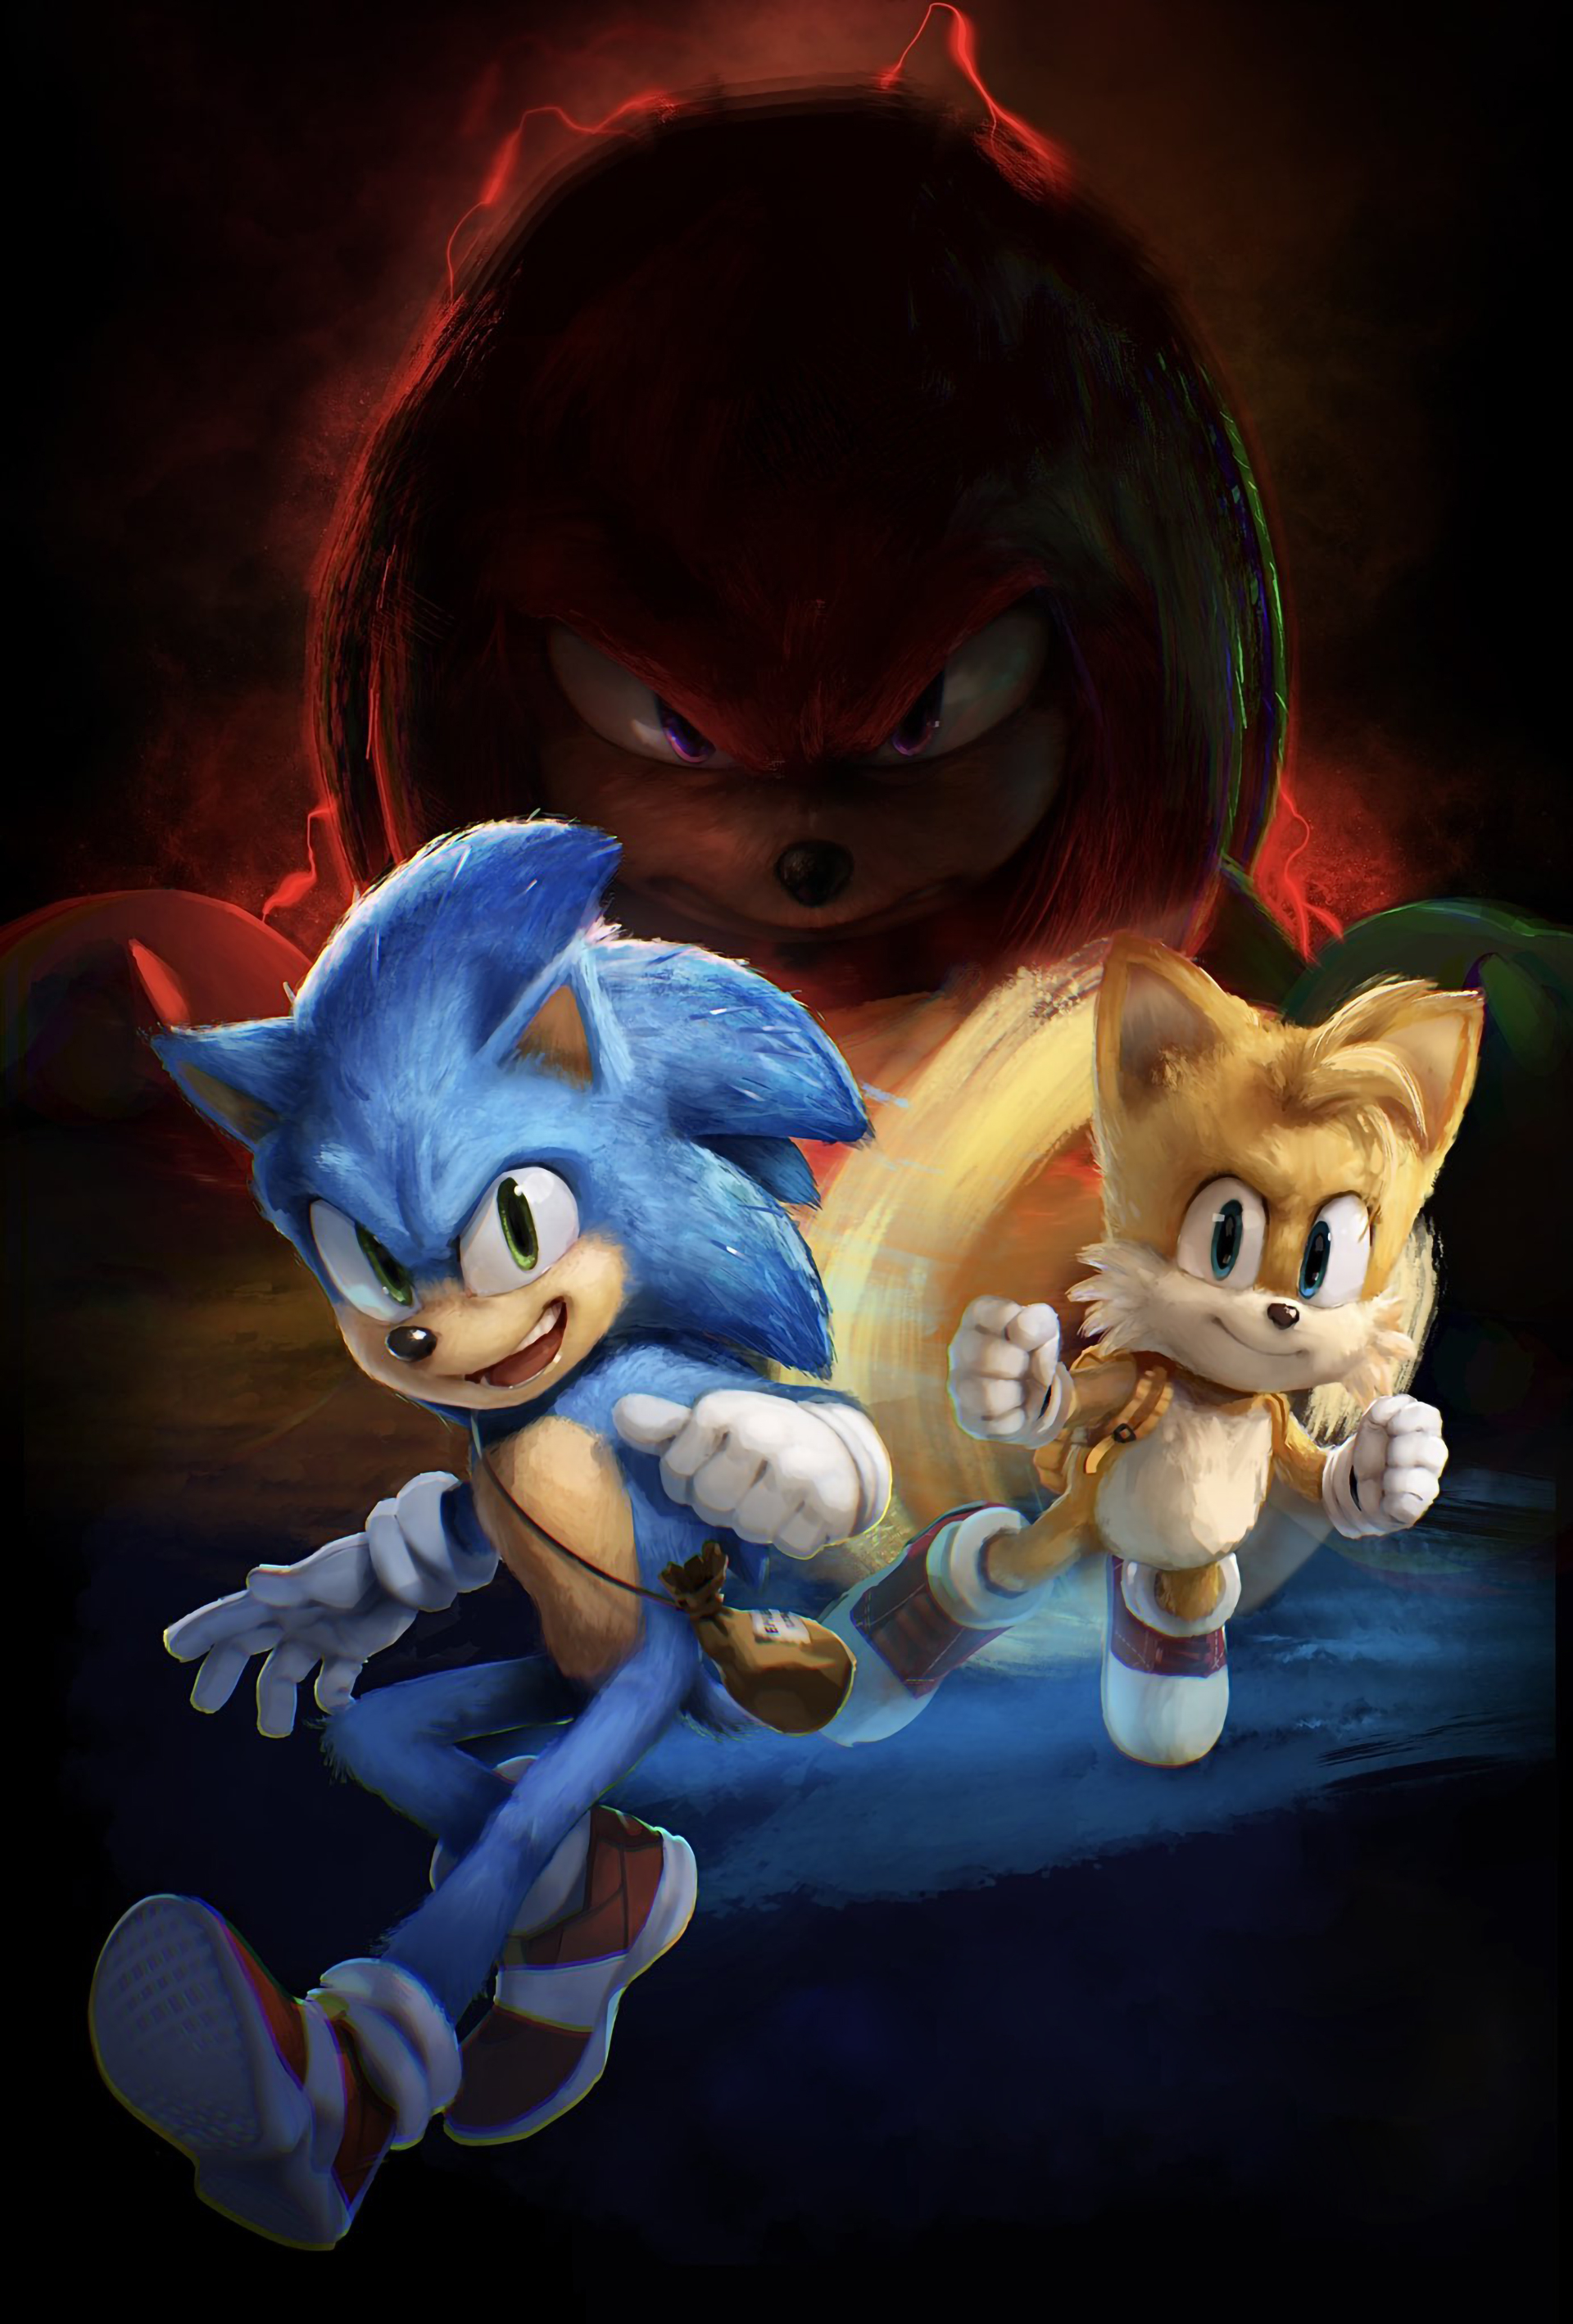 Sonic the Hedgehog 2 wallpaper by Edgestudent21 on DeviantArt